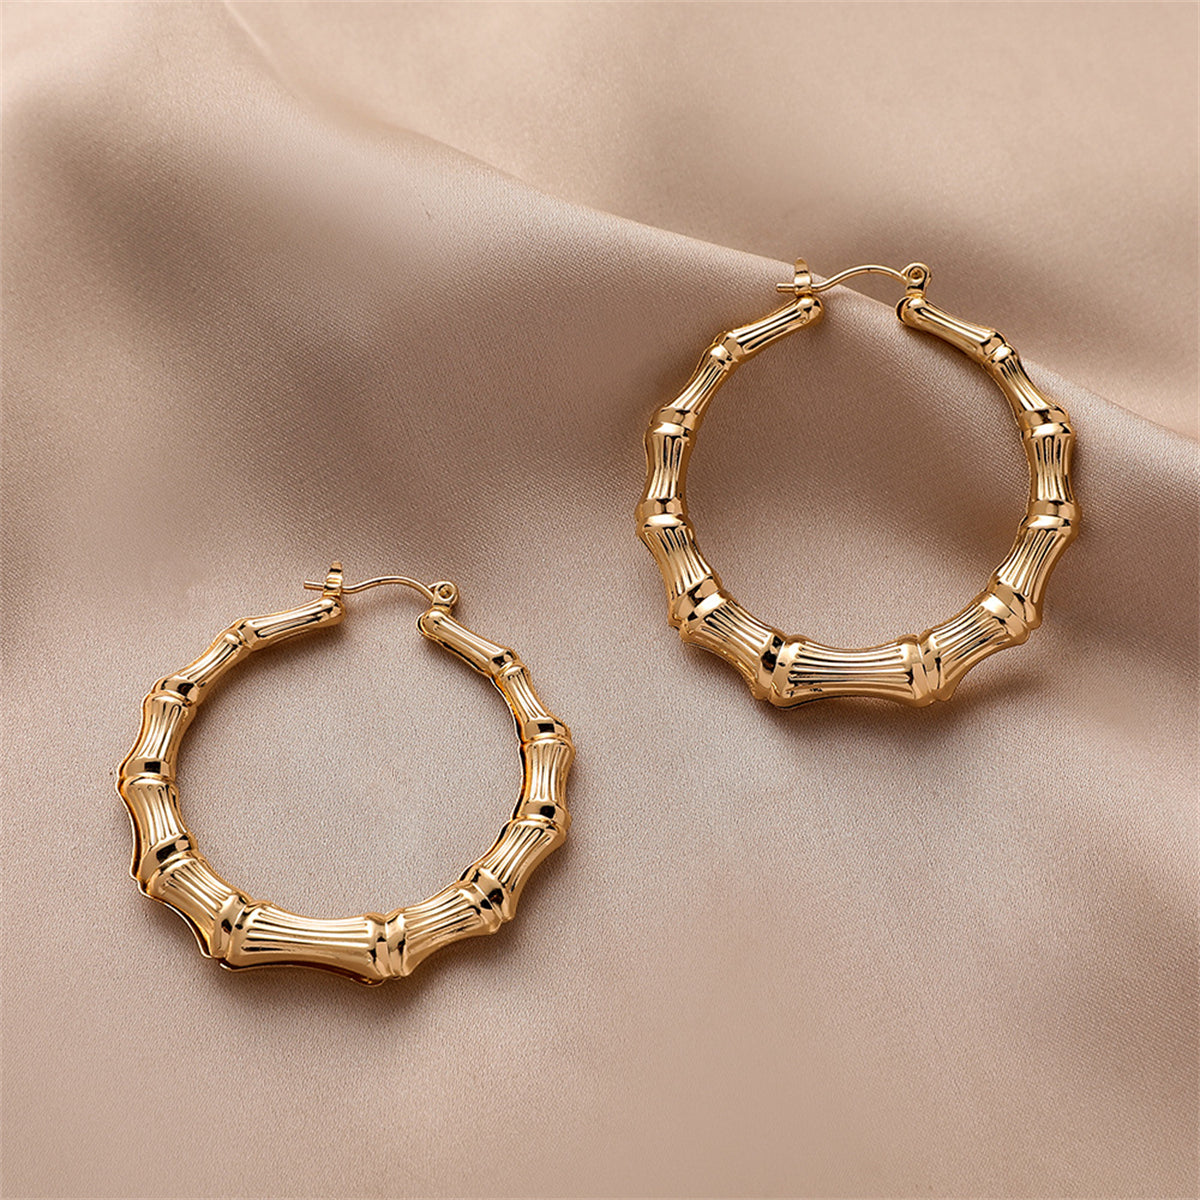 18K Gold-Plated Bamboo Hoop Earrings